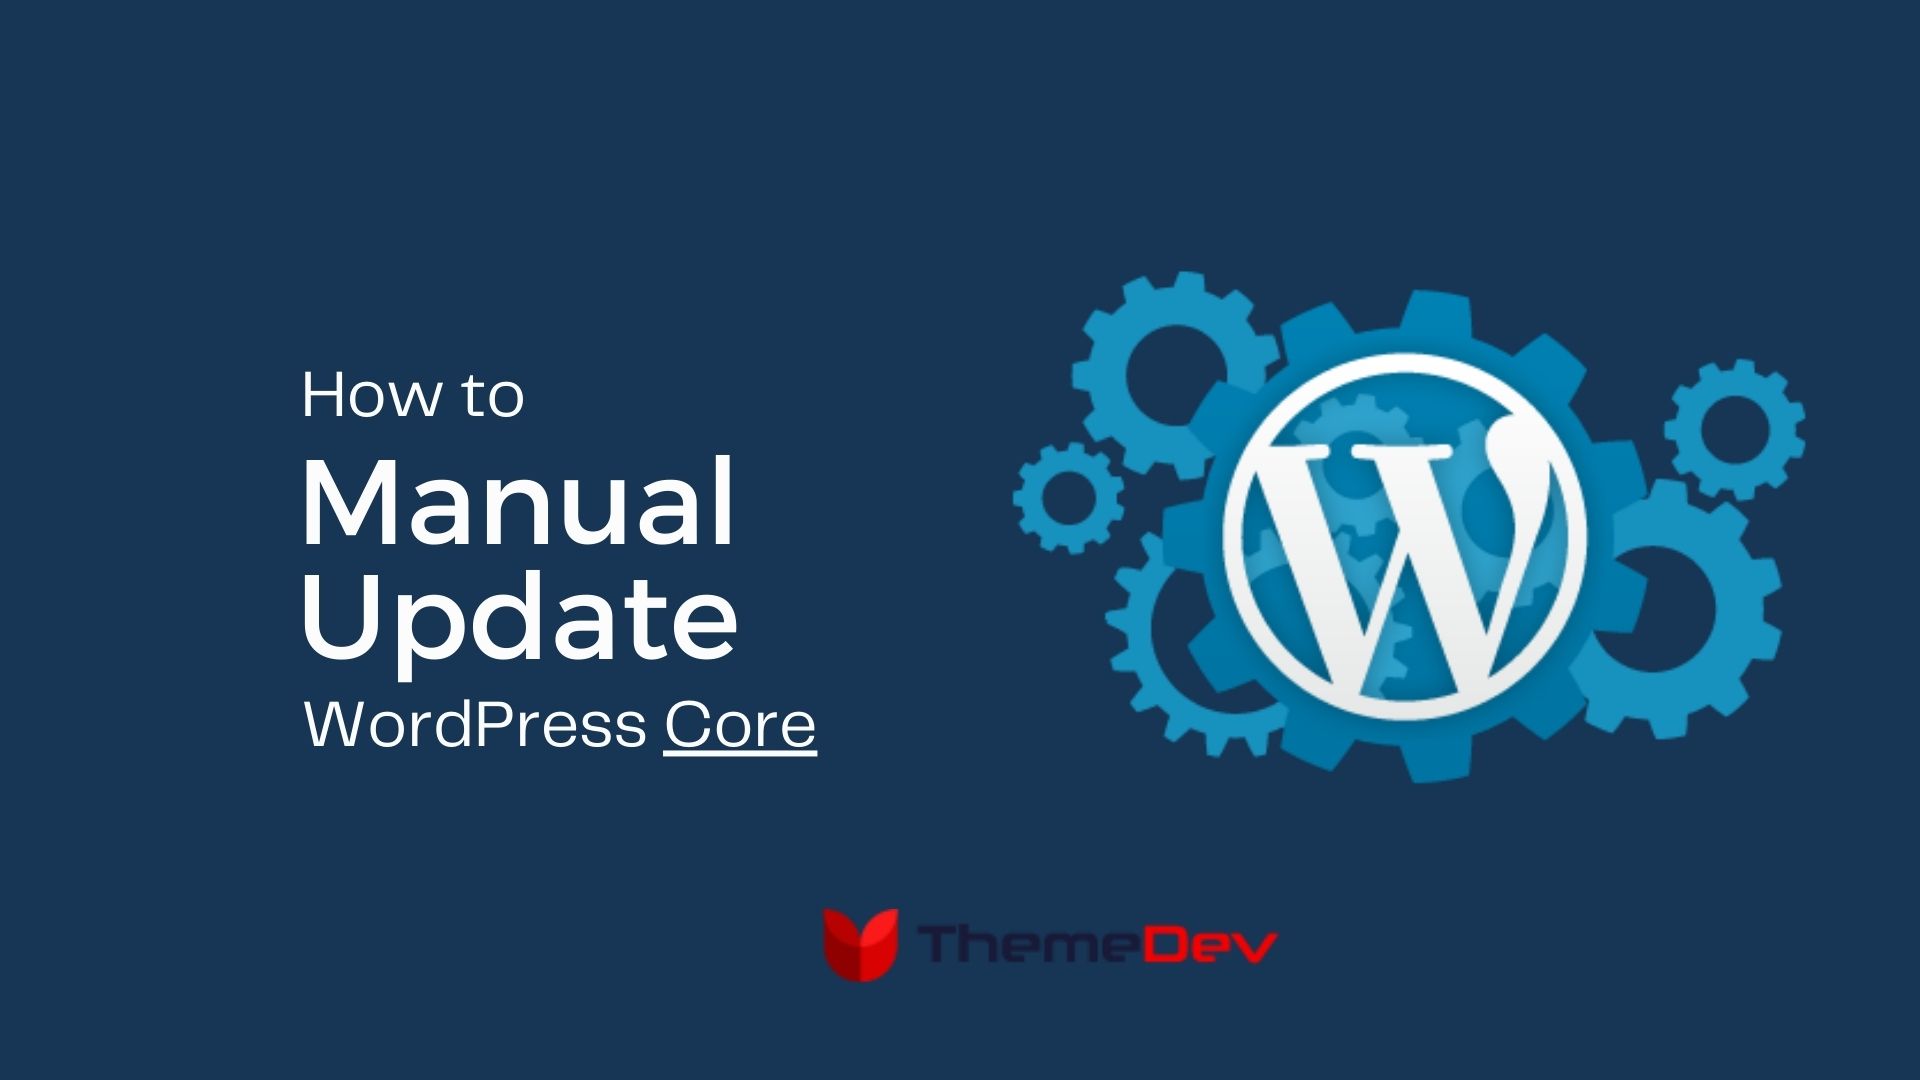 How to do manual update WordPress core